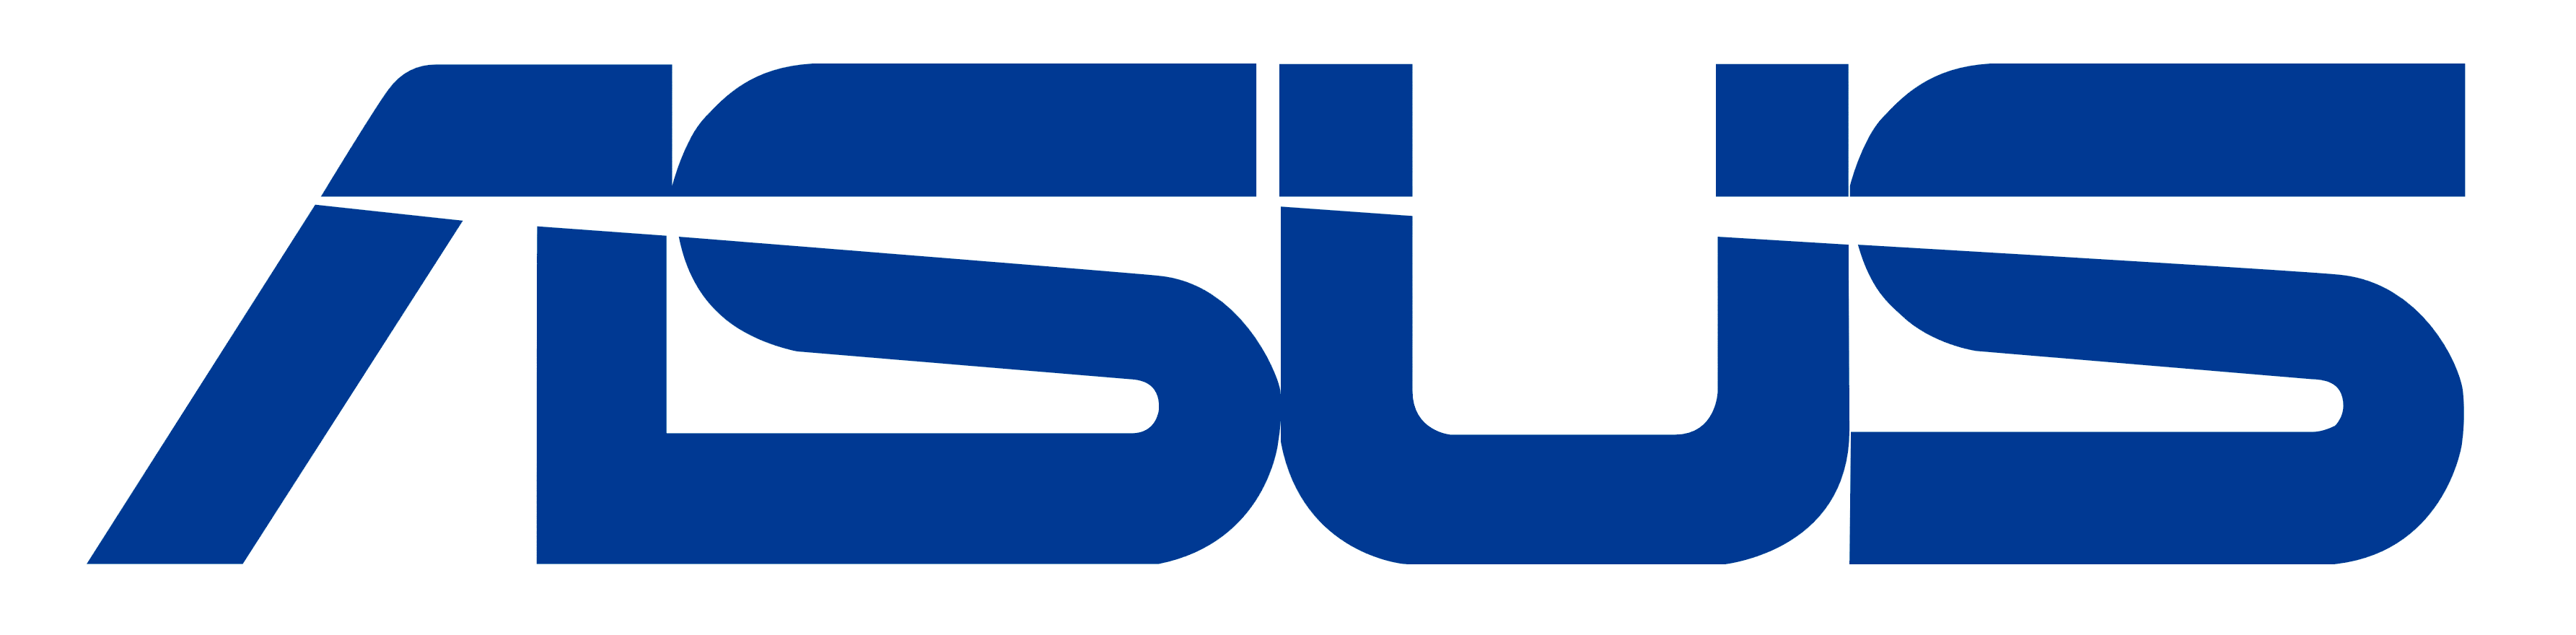 Логотип Asus (Асус)